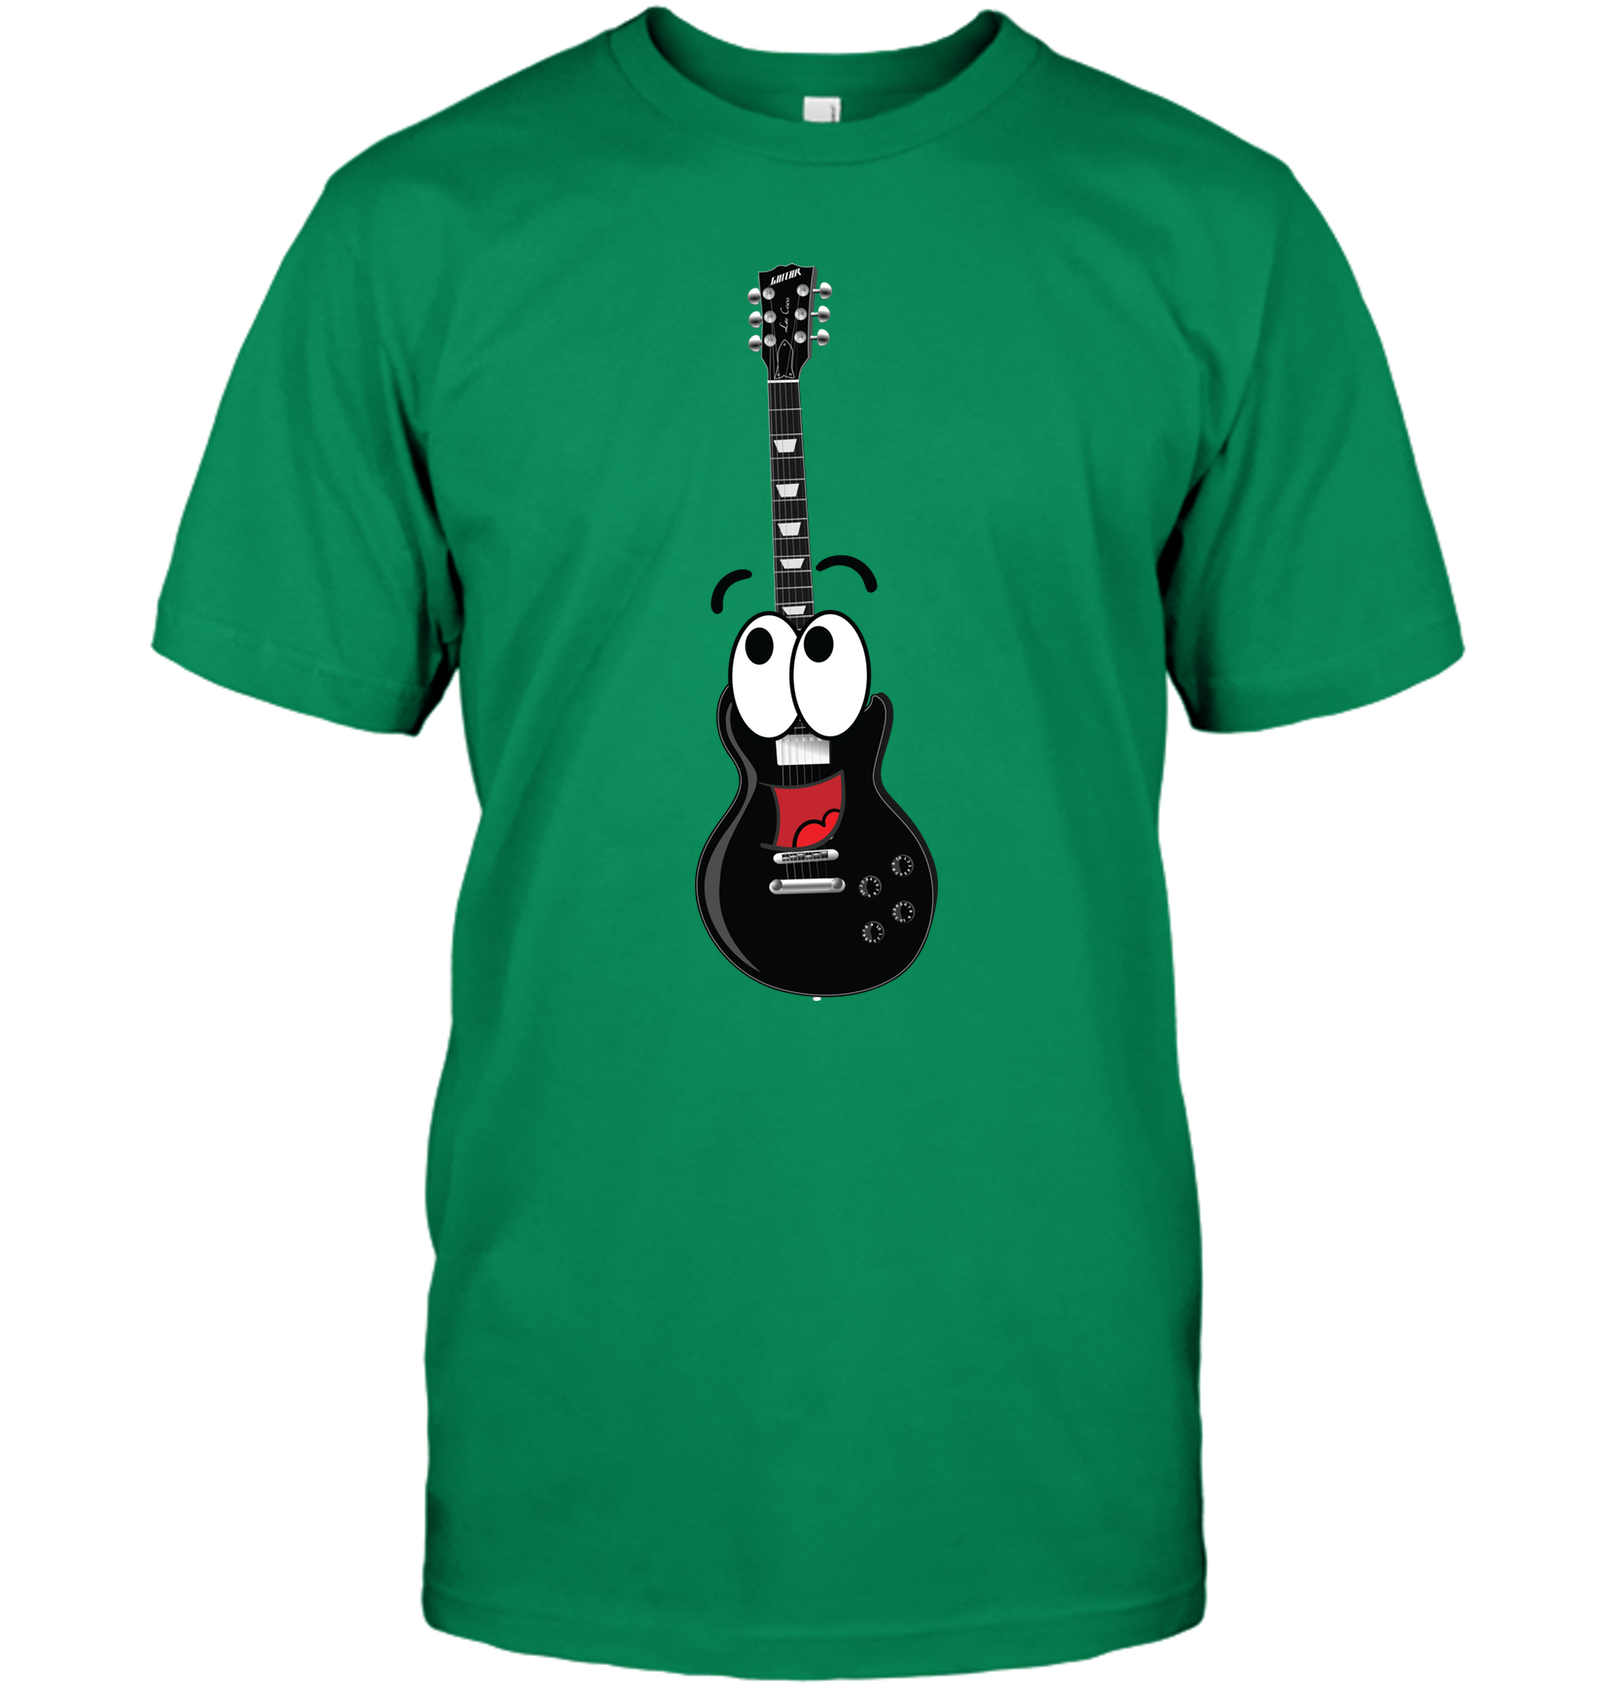 Electric Guitar Fun - Hanes Adult Tagless® T-Shirt